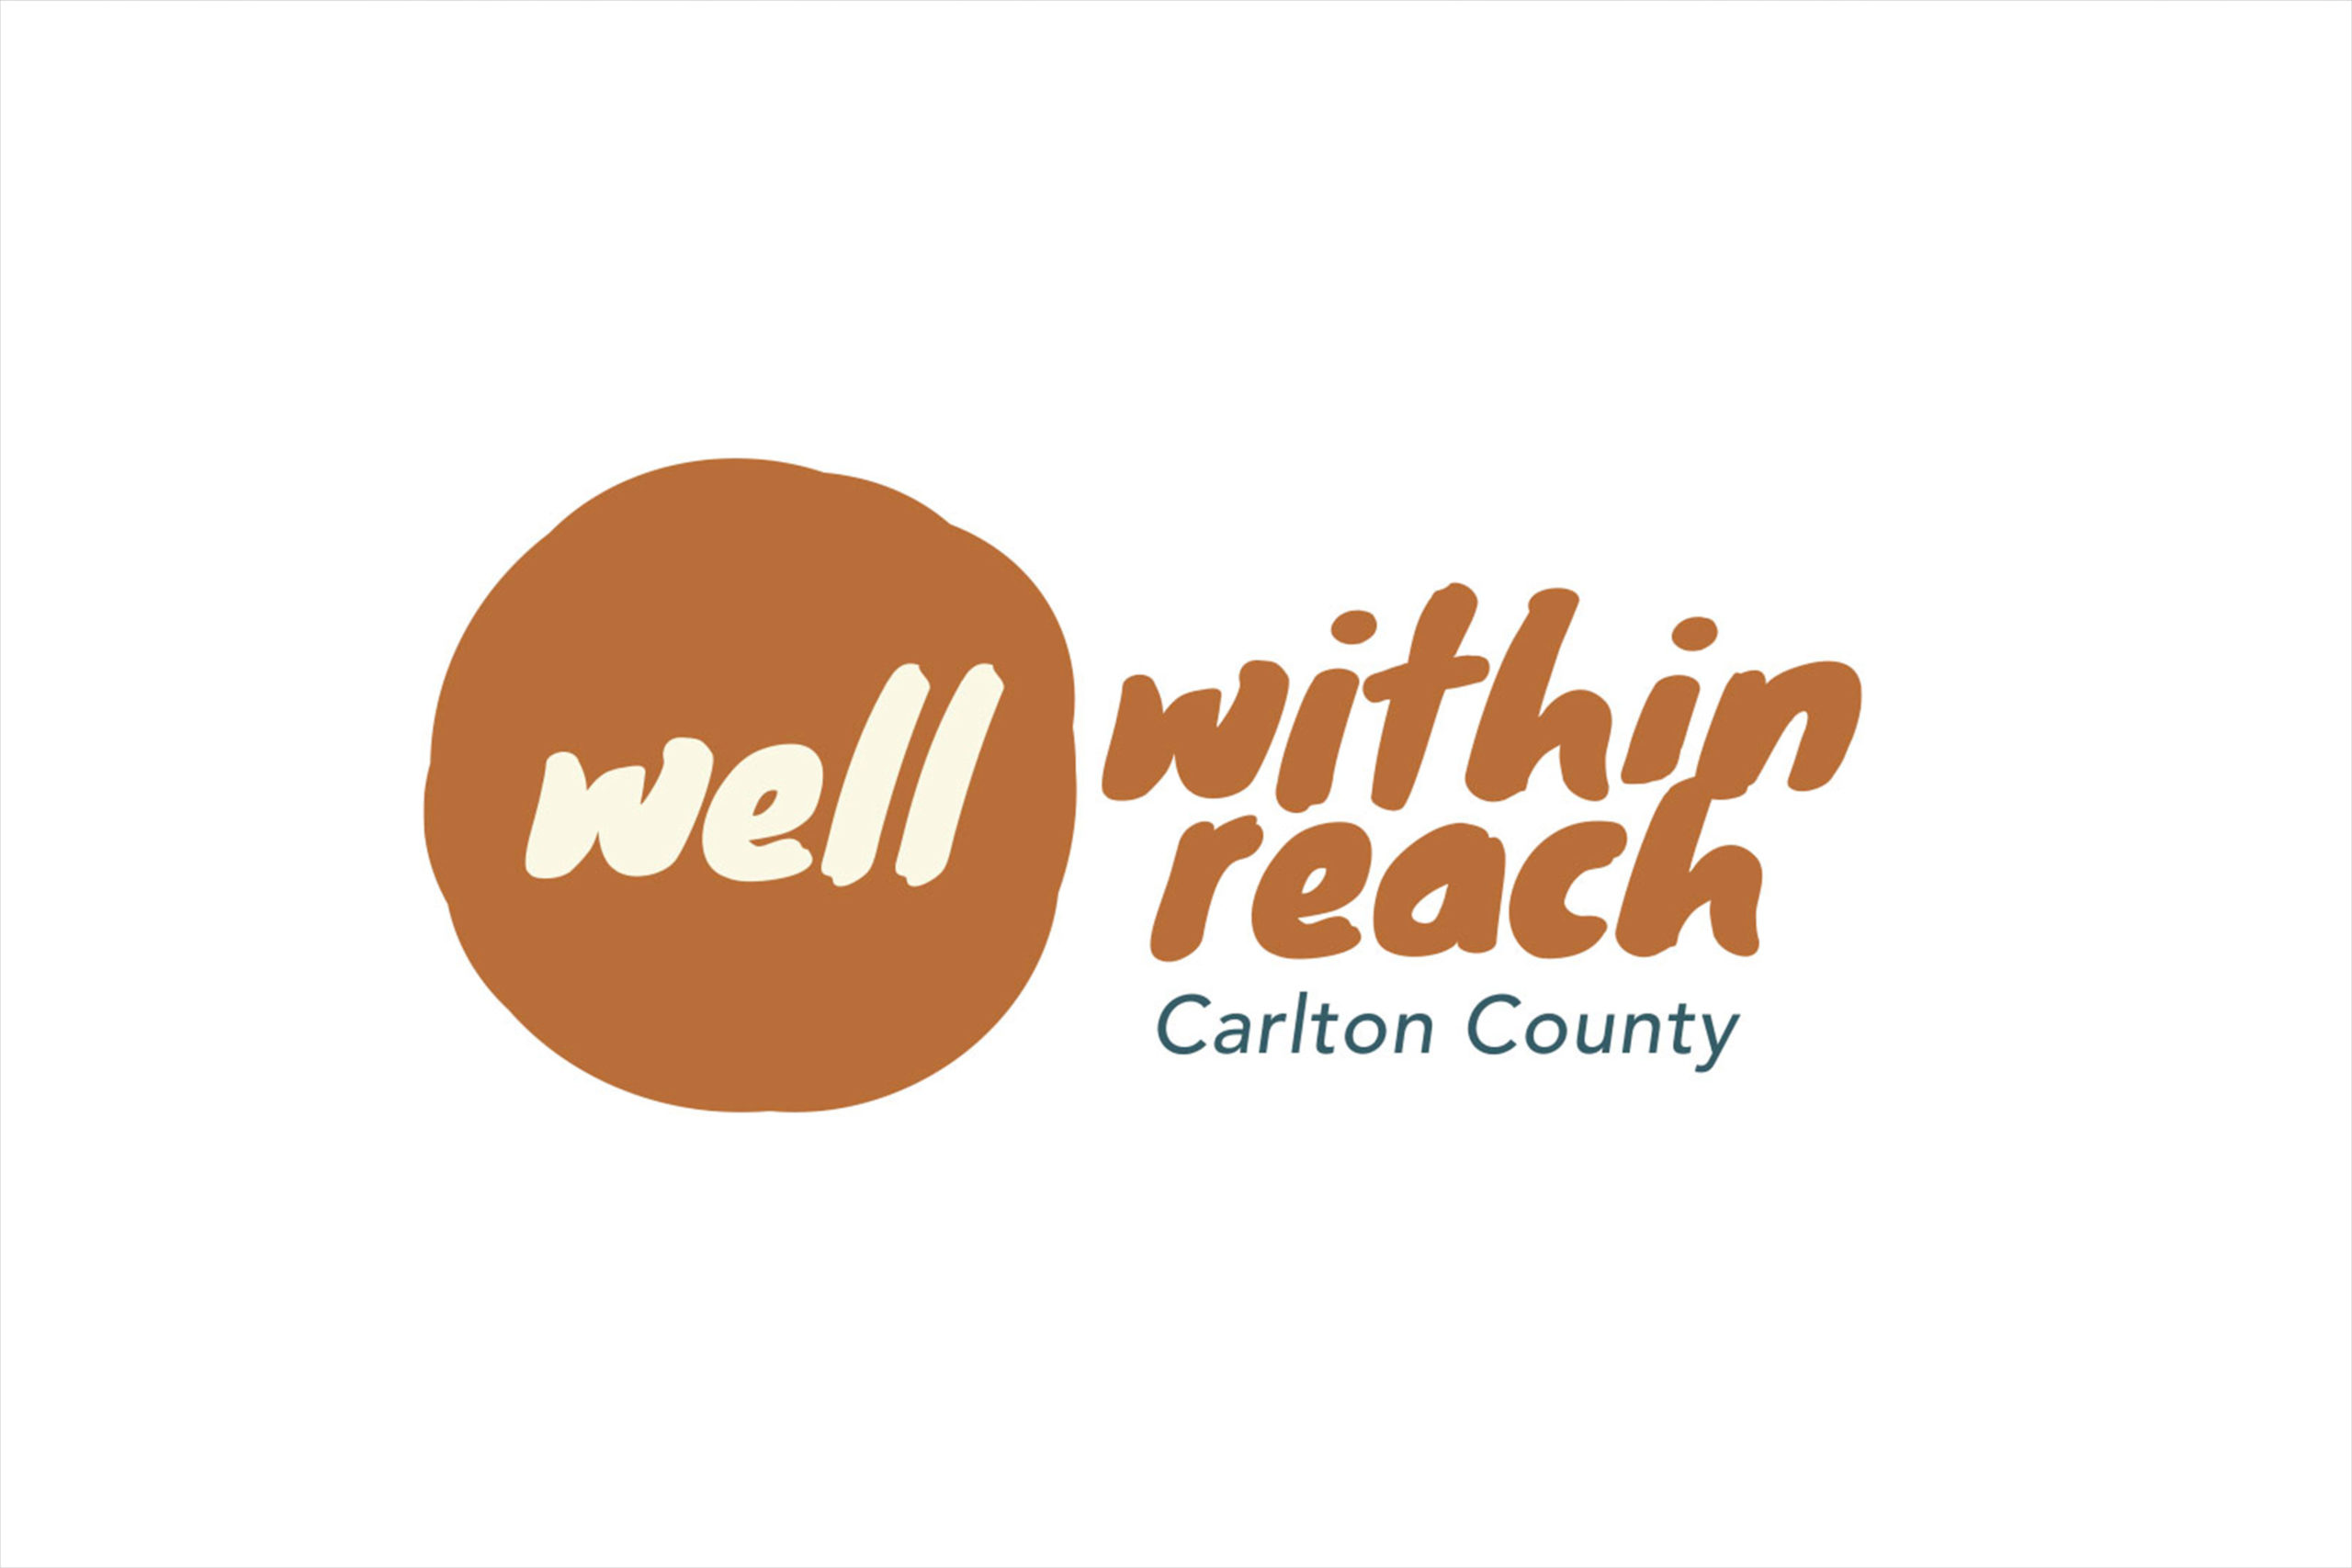 carlton county well within reach logo